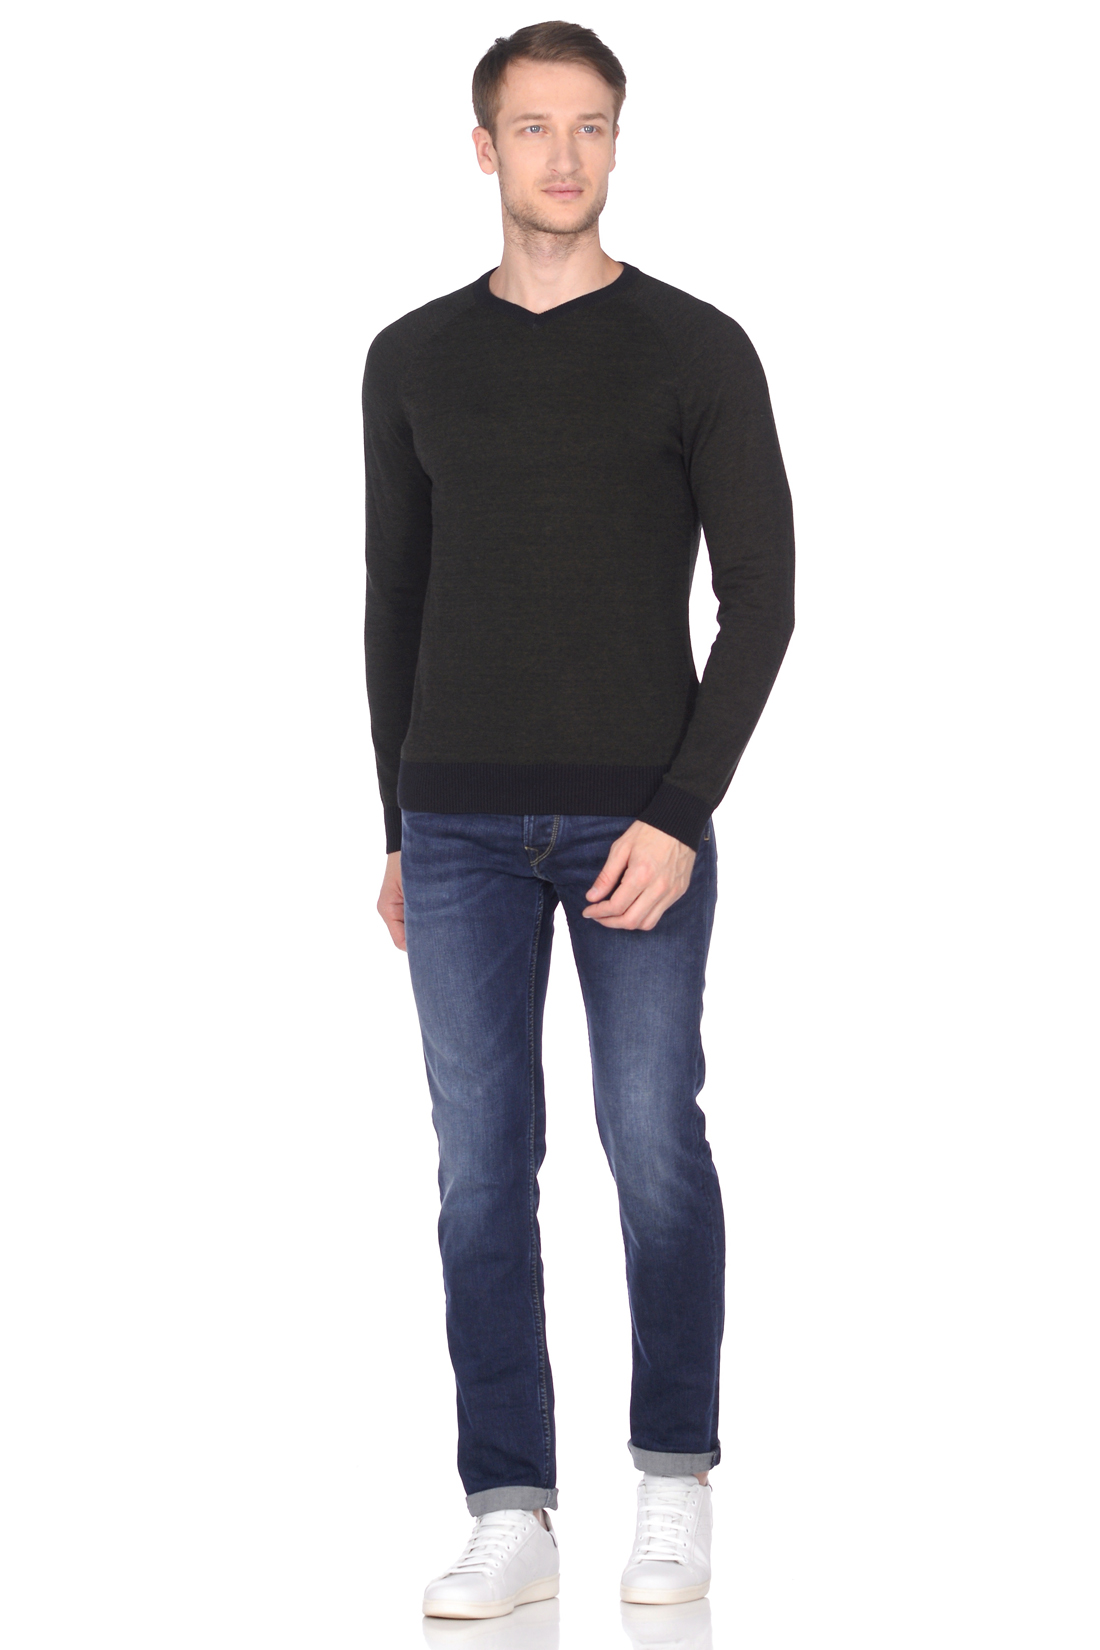 Пуловер с рукавами-реглан (арт. baon B638557), размер L, цвет зеленый Пуловер с рукавами-реглан (арт. baon B638557) - фото 3